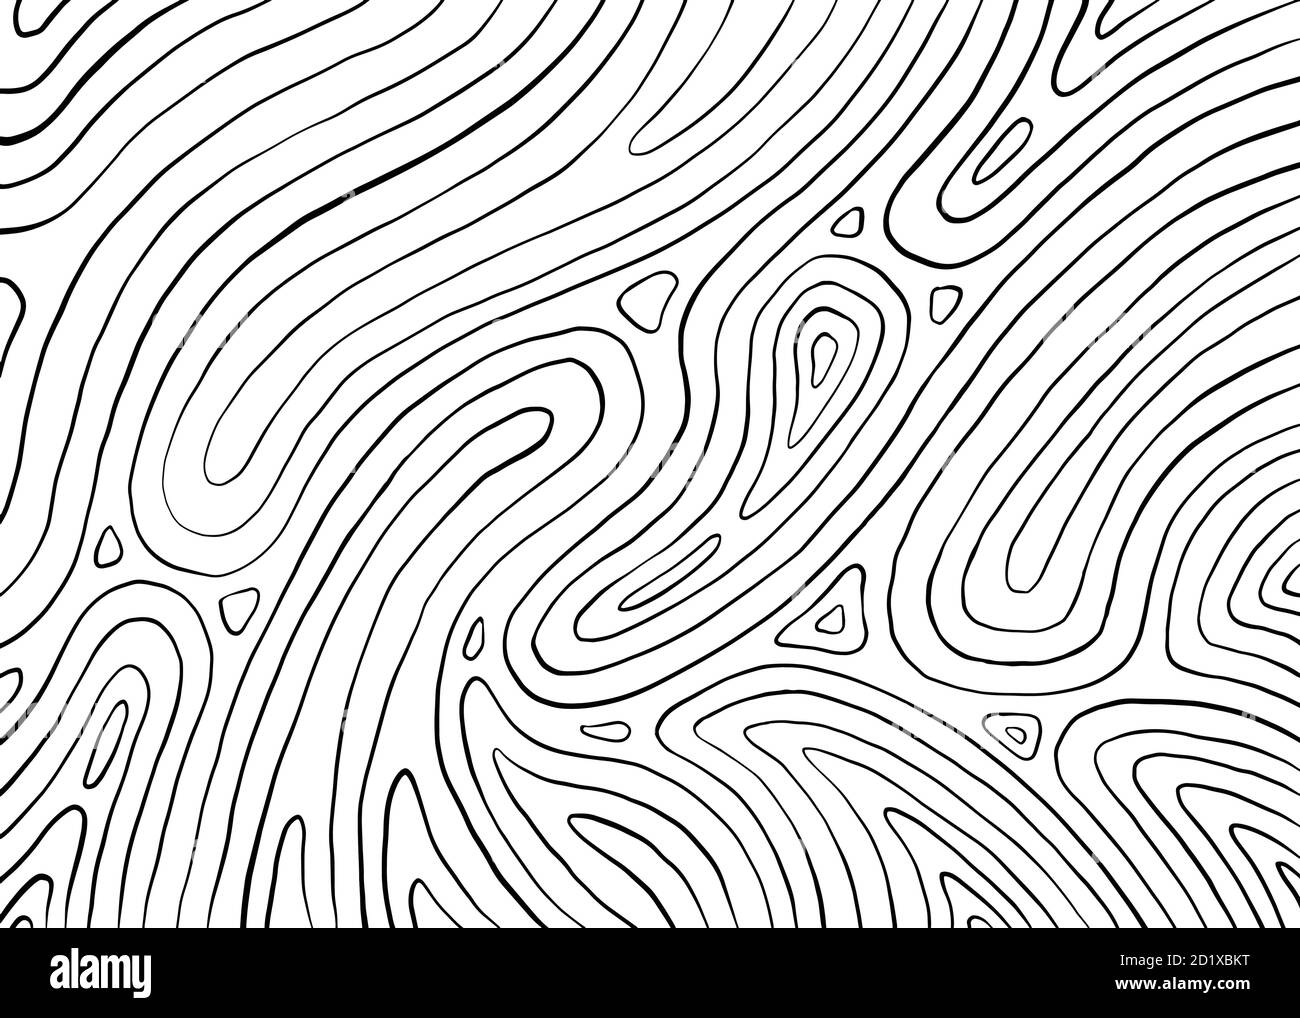 https://c8.alamy.com/comp/2D1XBKT/abstract-wave-lines-black-and-white-line-pattern-vector-illustration-for-web-banner-poster-backdrop-background-2D1XBKT.jpg